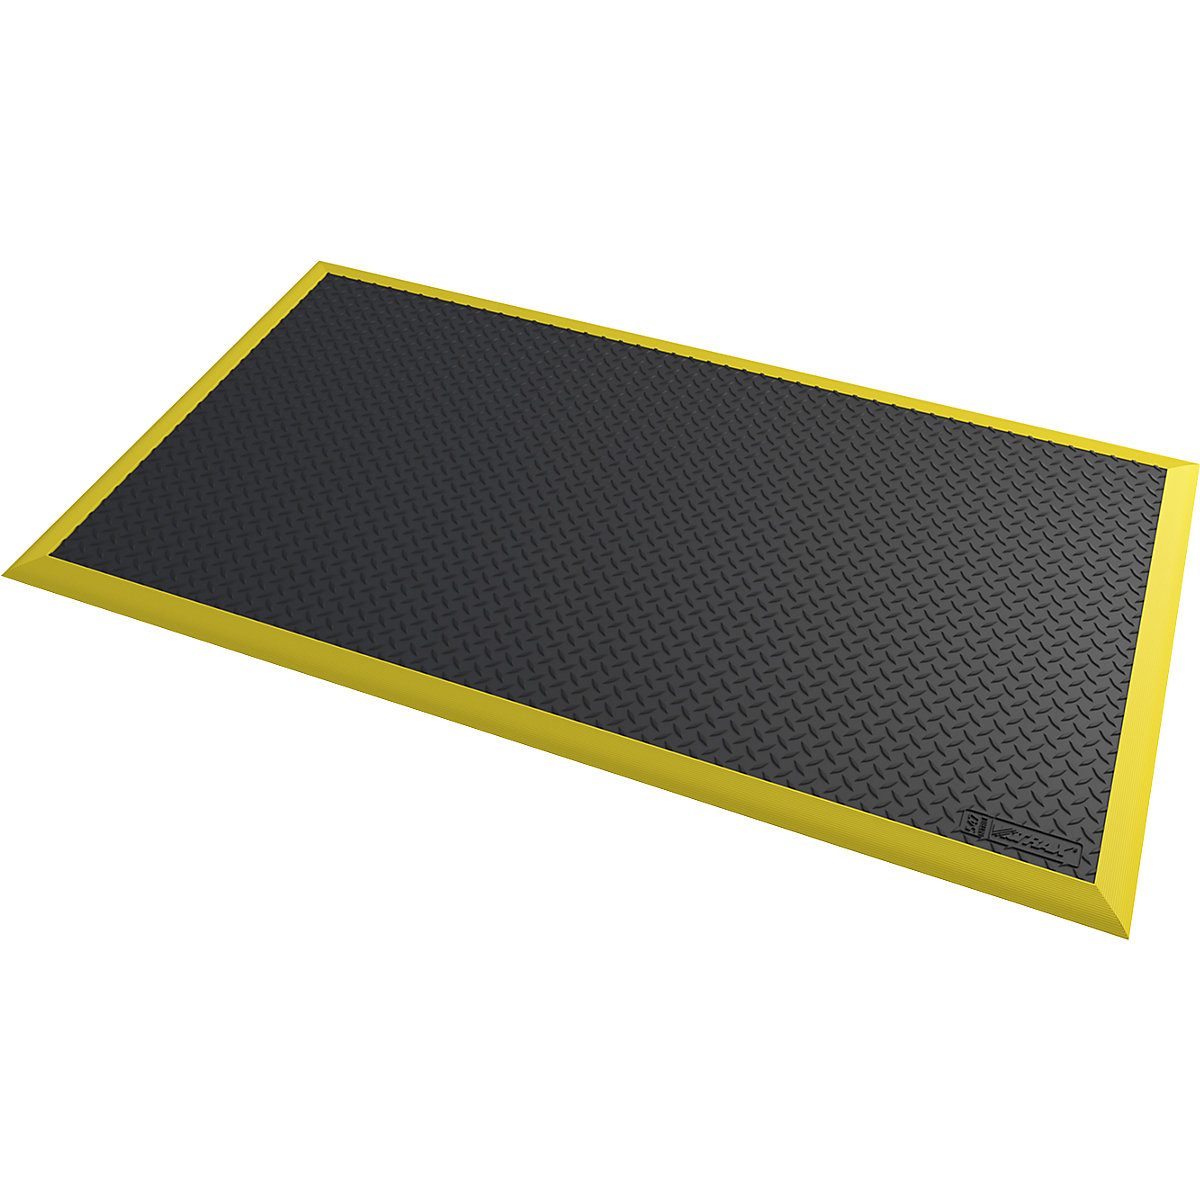 Diamond Flex™ ESD anti-fatigue matting – NOTRAX, LxW 1630 x 970 mm, black / yellow